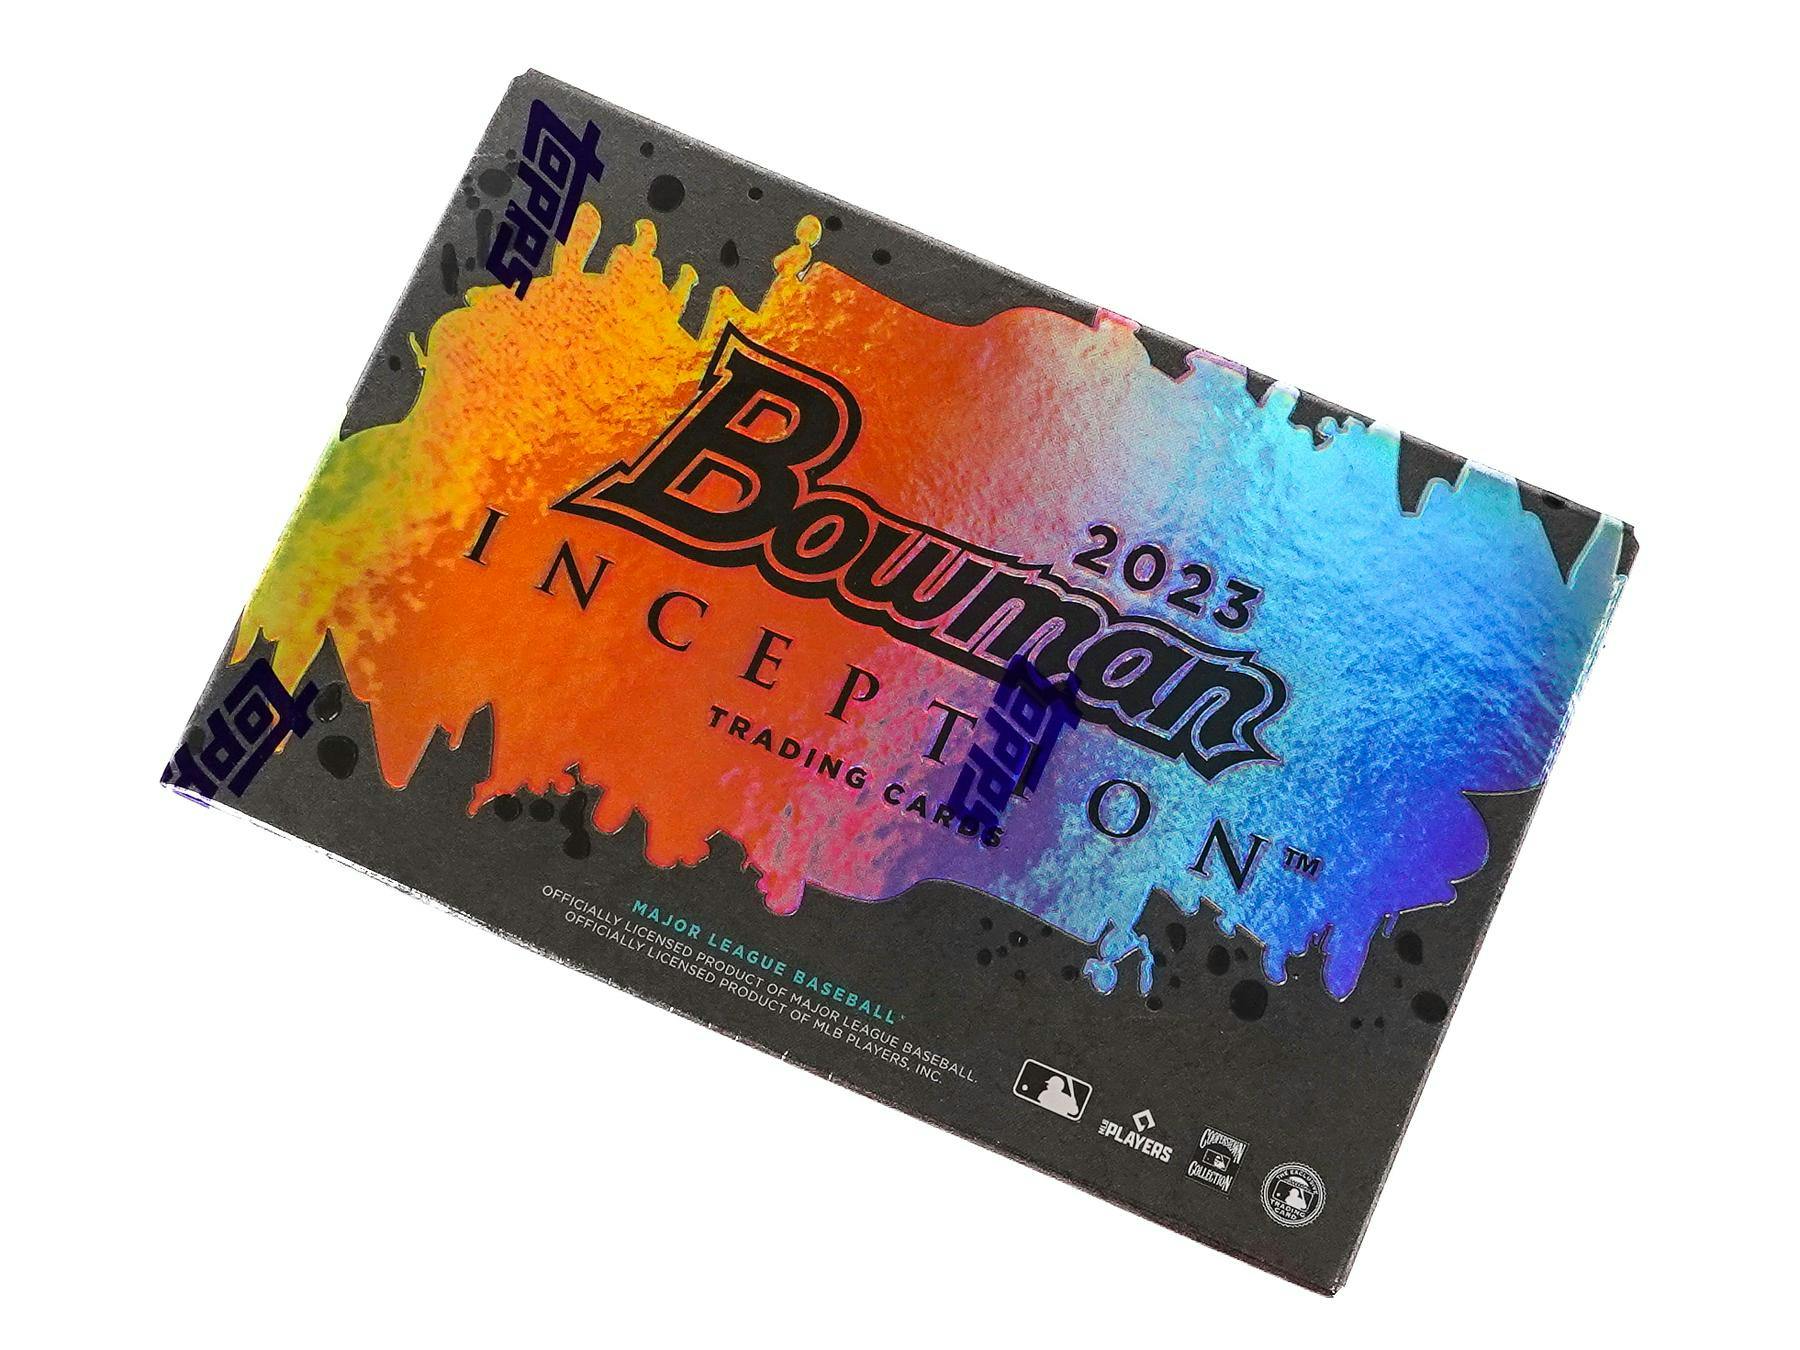 2023 Bowman Inception Baseball Hobby Box - Miraj Trading